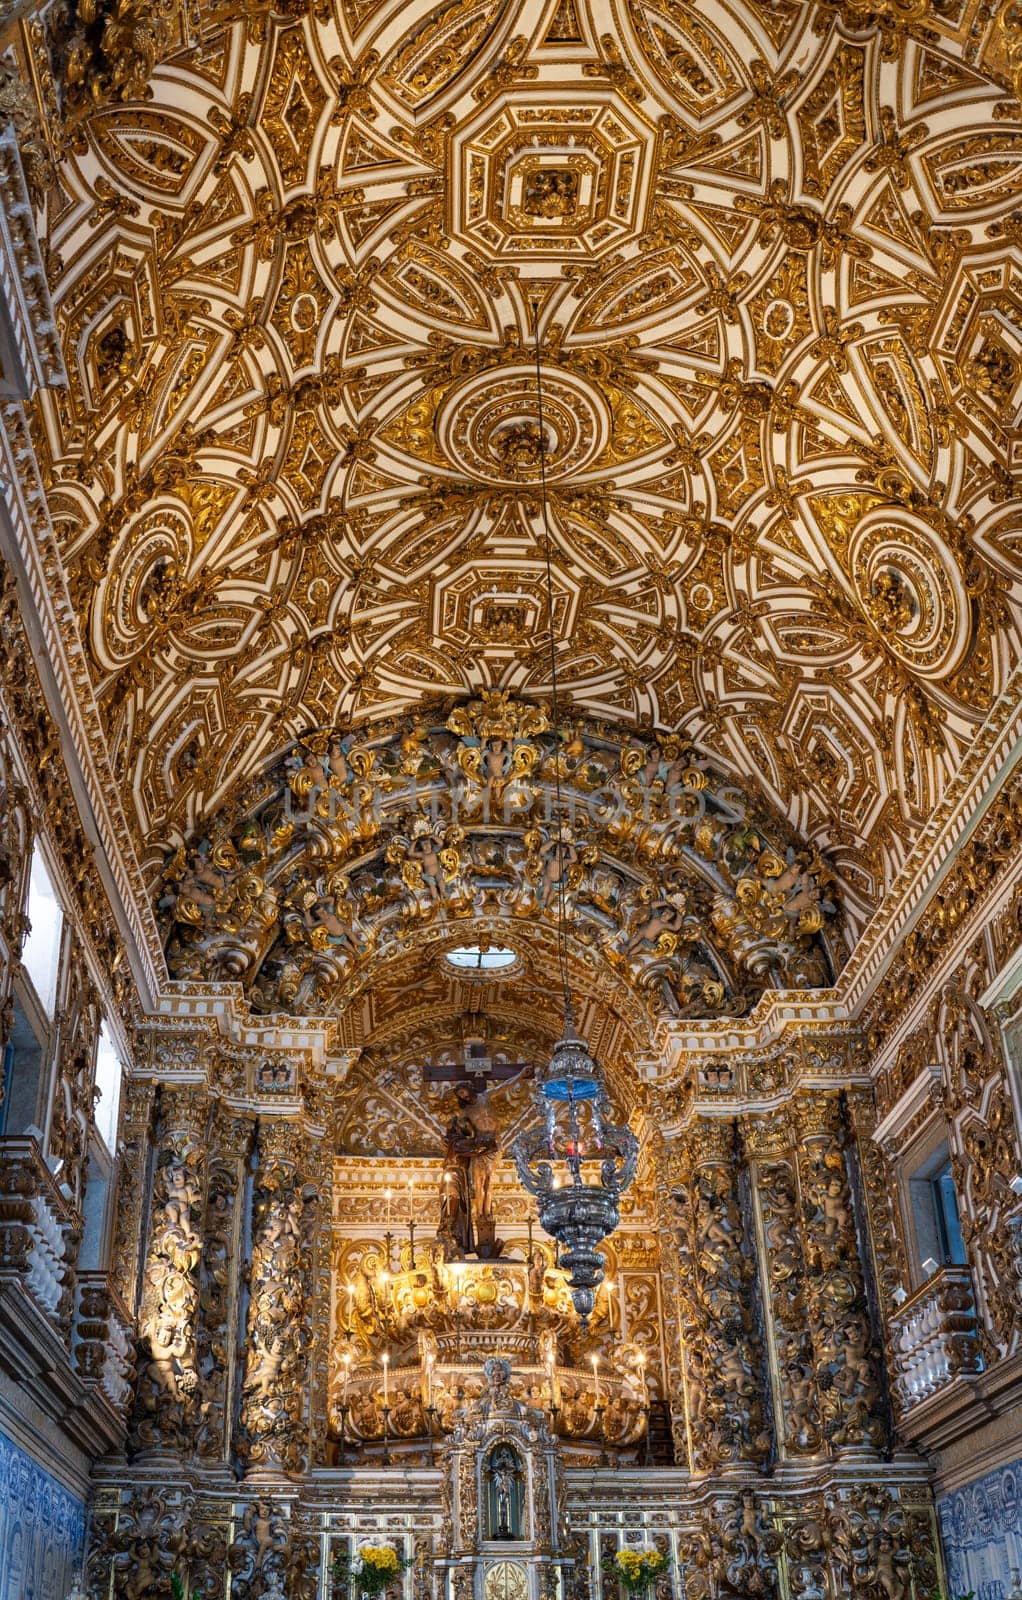 Baroque Church Ceiling and Ornate Gilded Artwork Captured by FerradalFCG